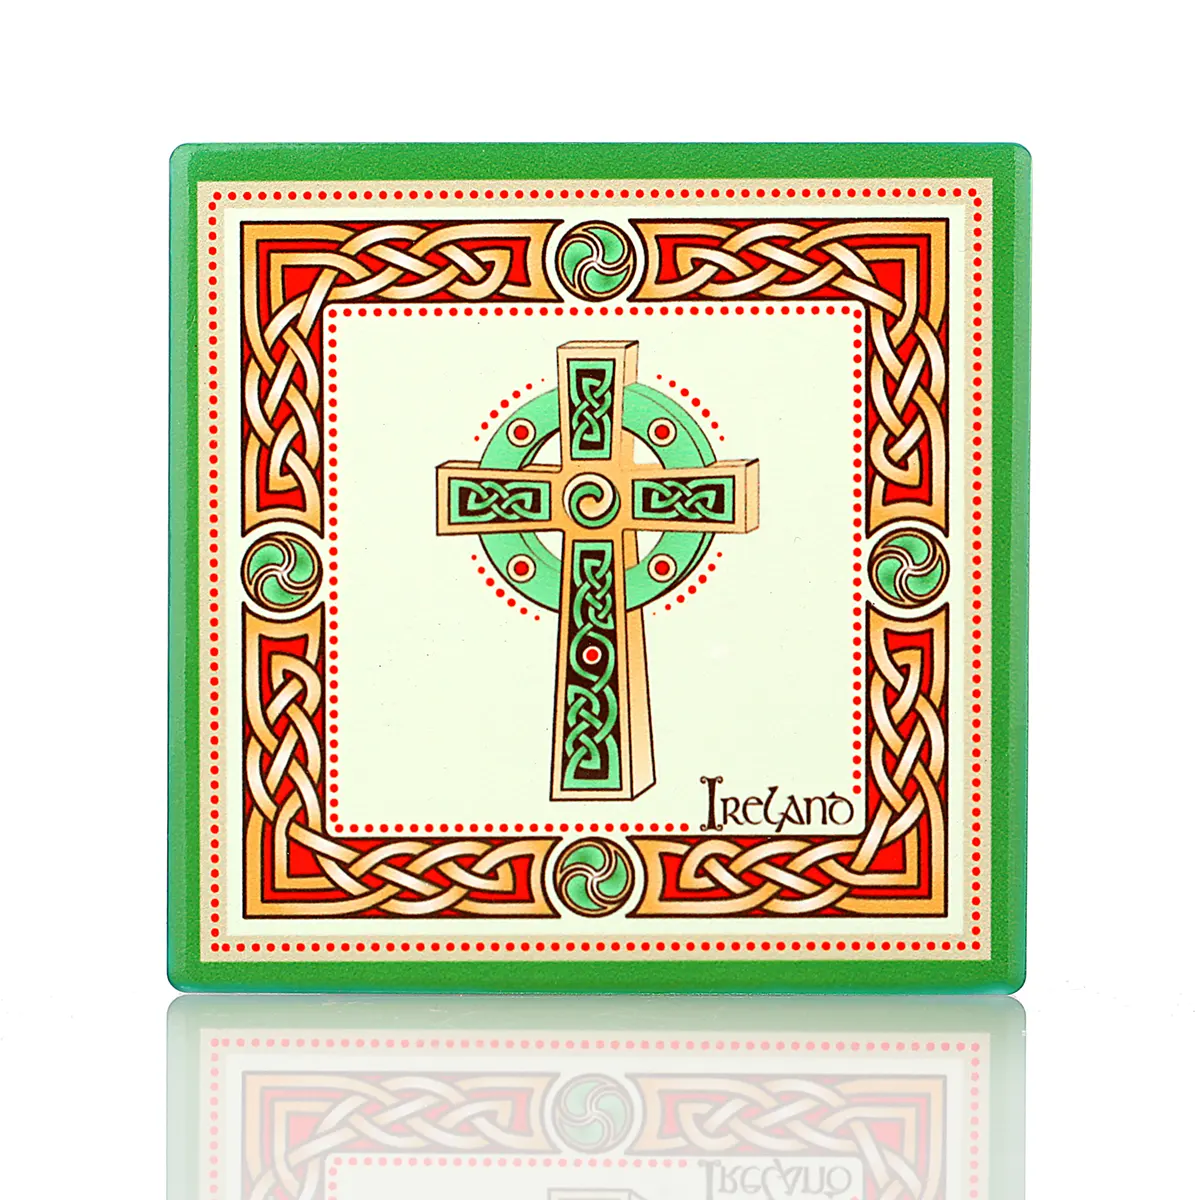 Celtic Cross Coaster - Irischer Keramik-Getränkeuntersetzer mit keltischem Kreuz